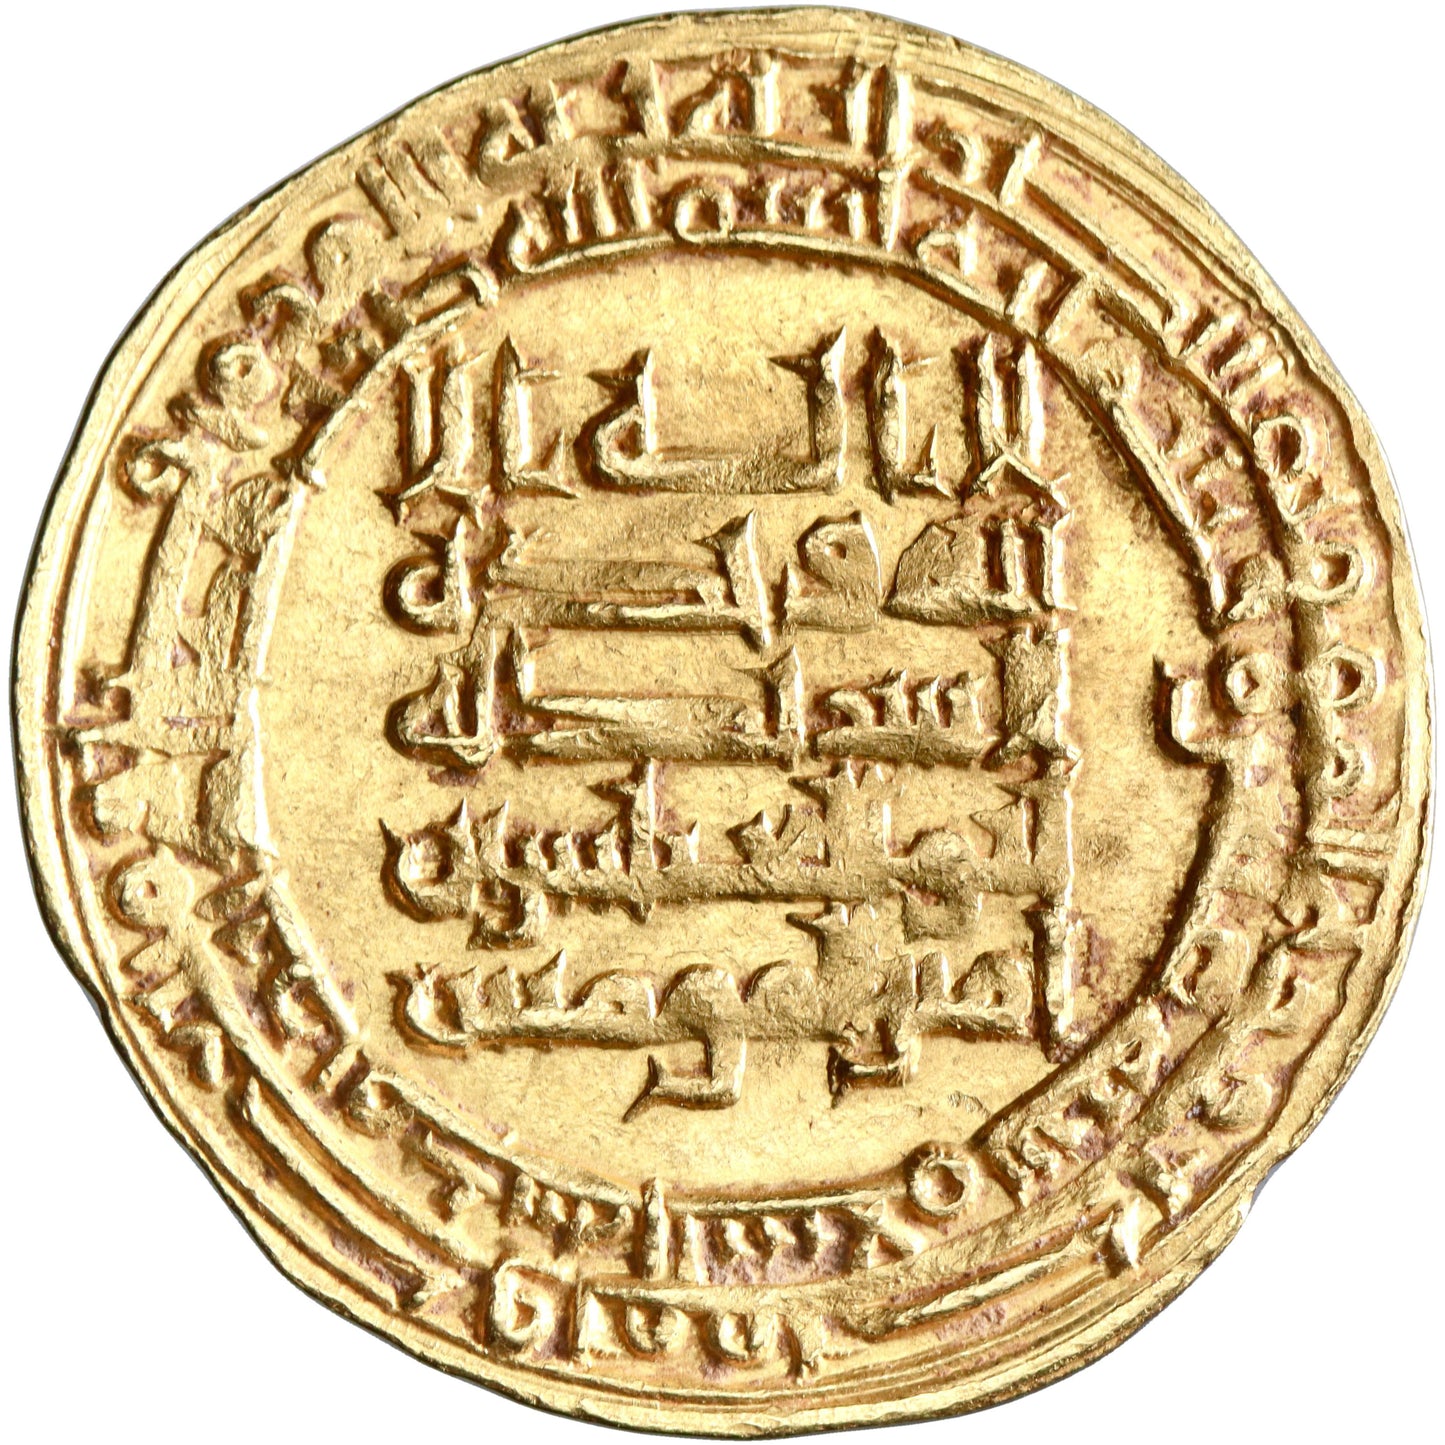 Abbasid, al-Muqtadir, gold dinar, Madinat al-Salam (Baghdad) mint, AH 310, citing Abu al-'Abbas